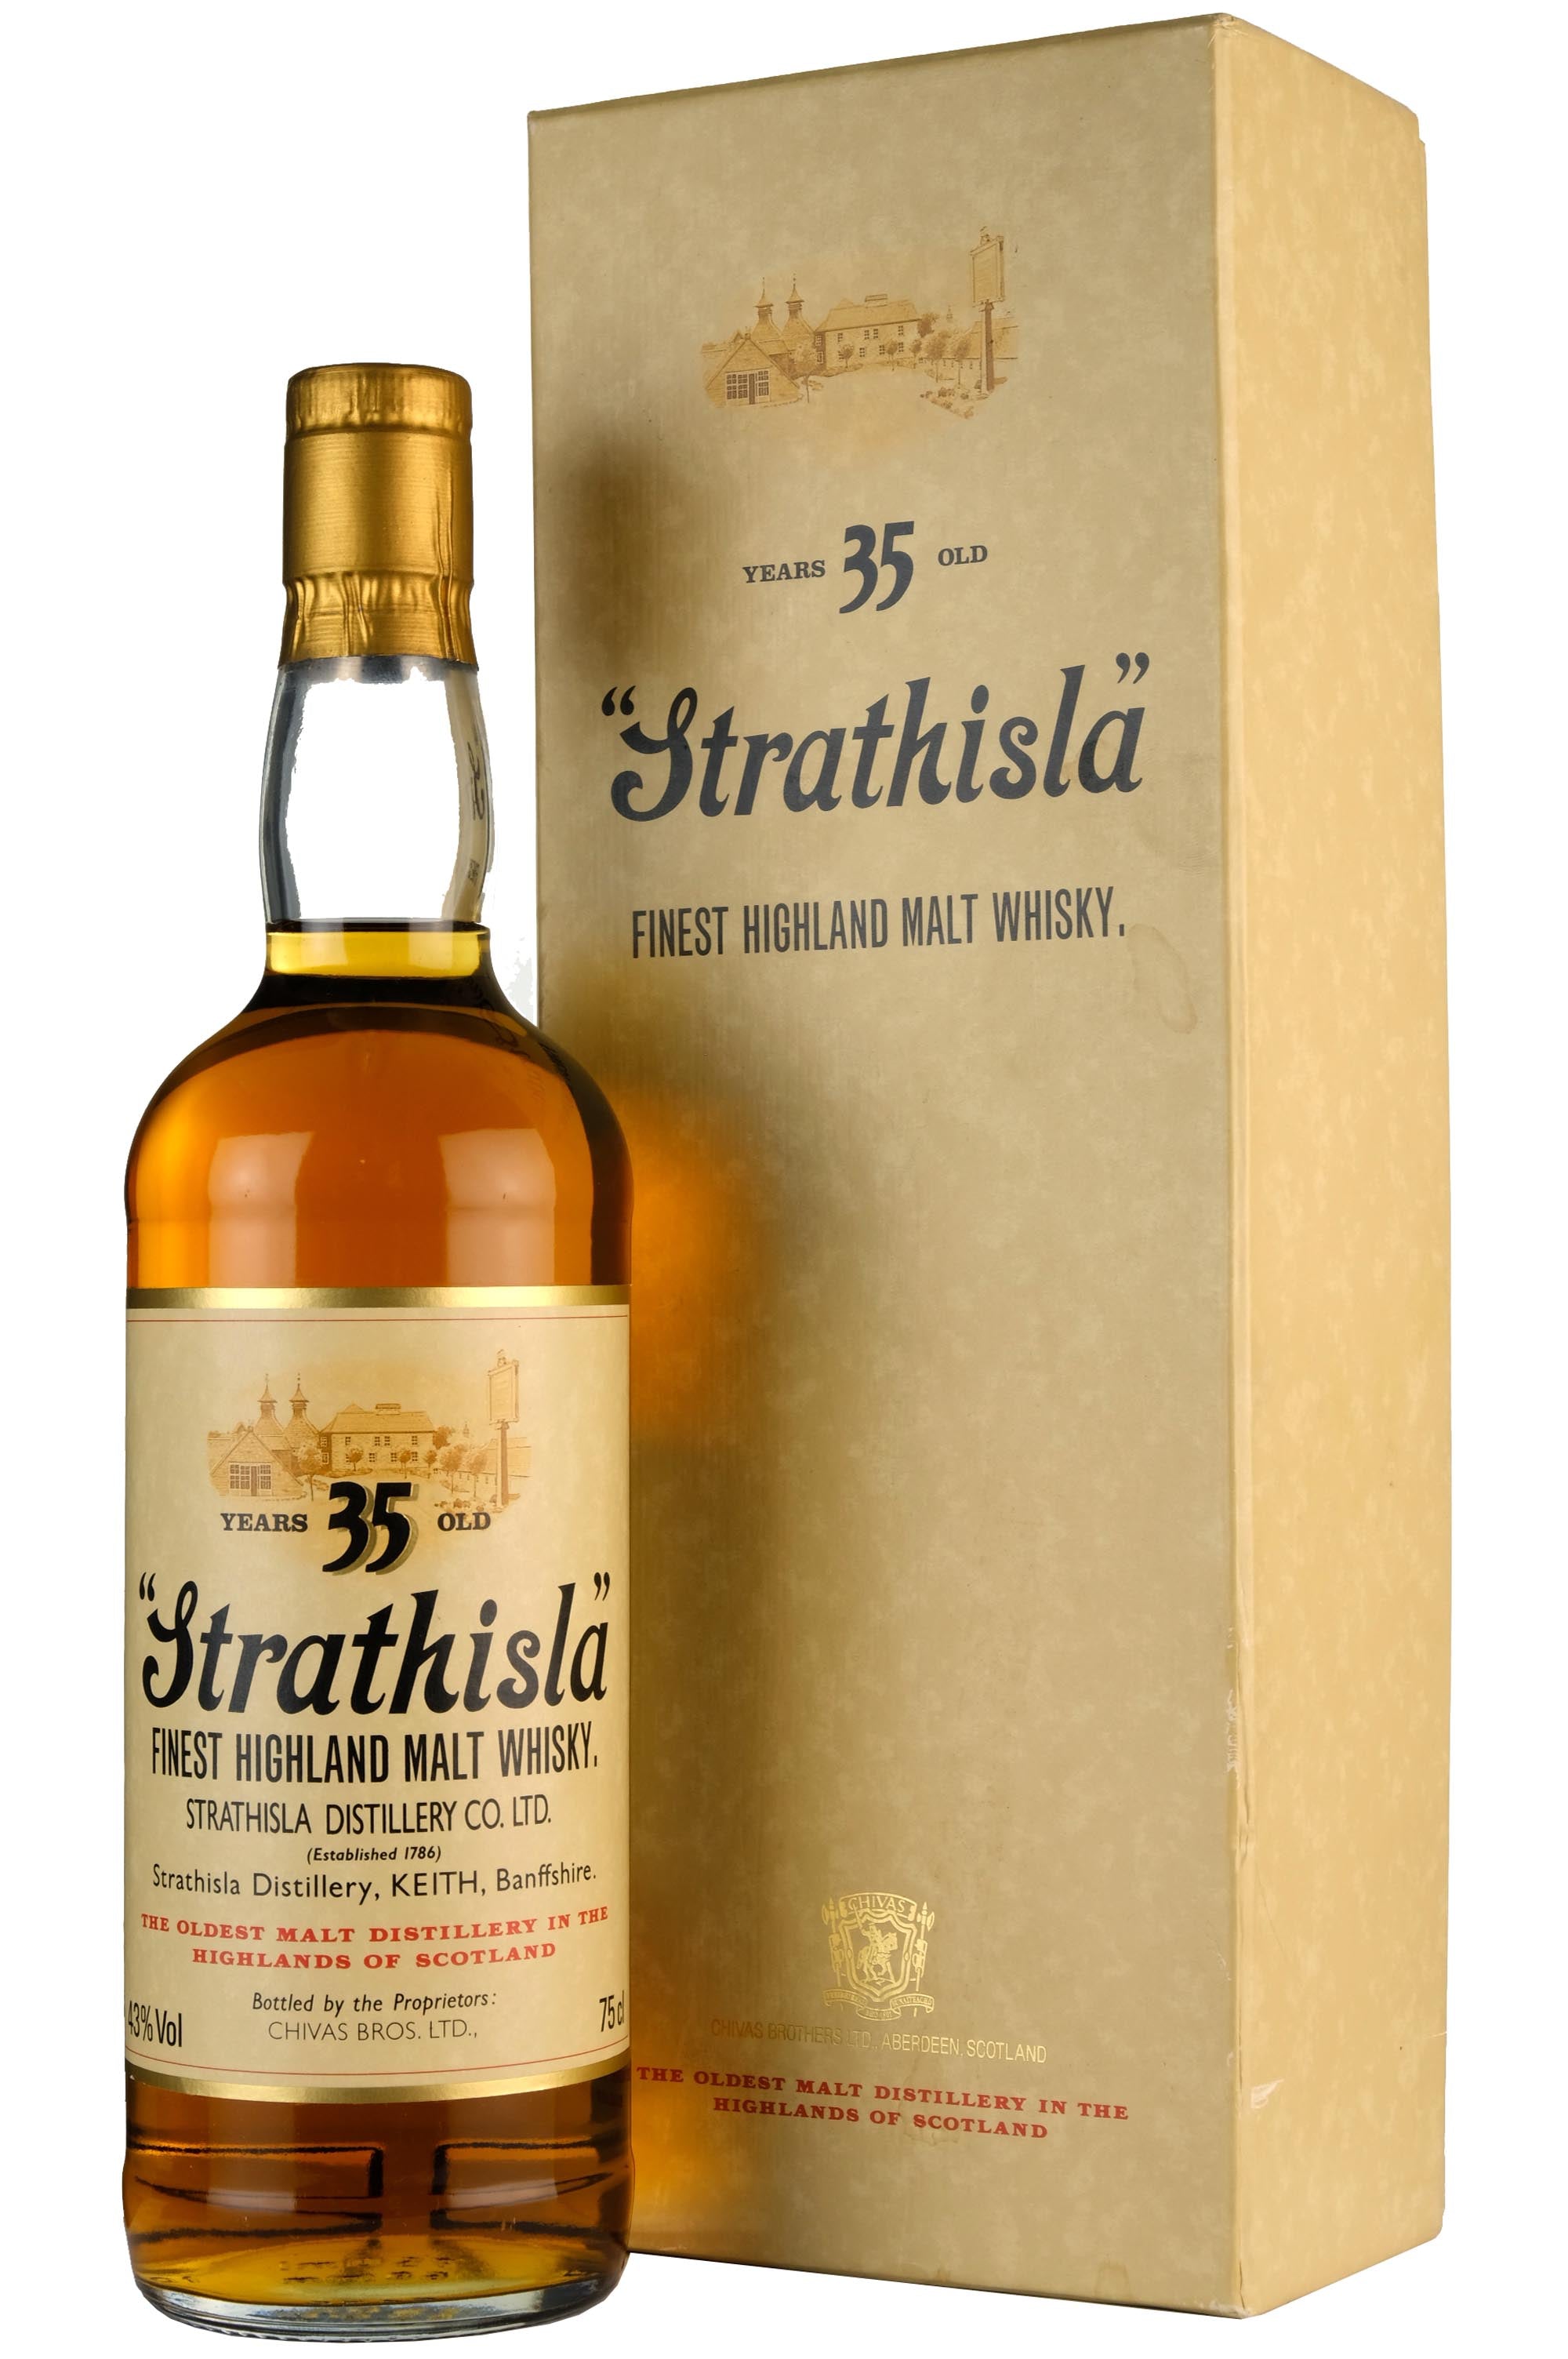 Strathisla 35 Year Old Bicentenary 1786-1986